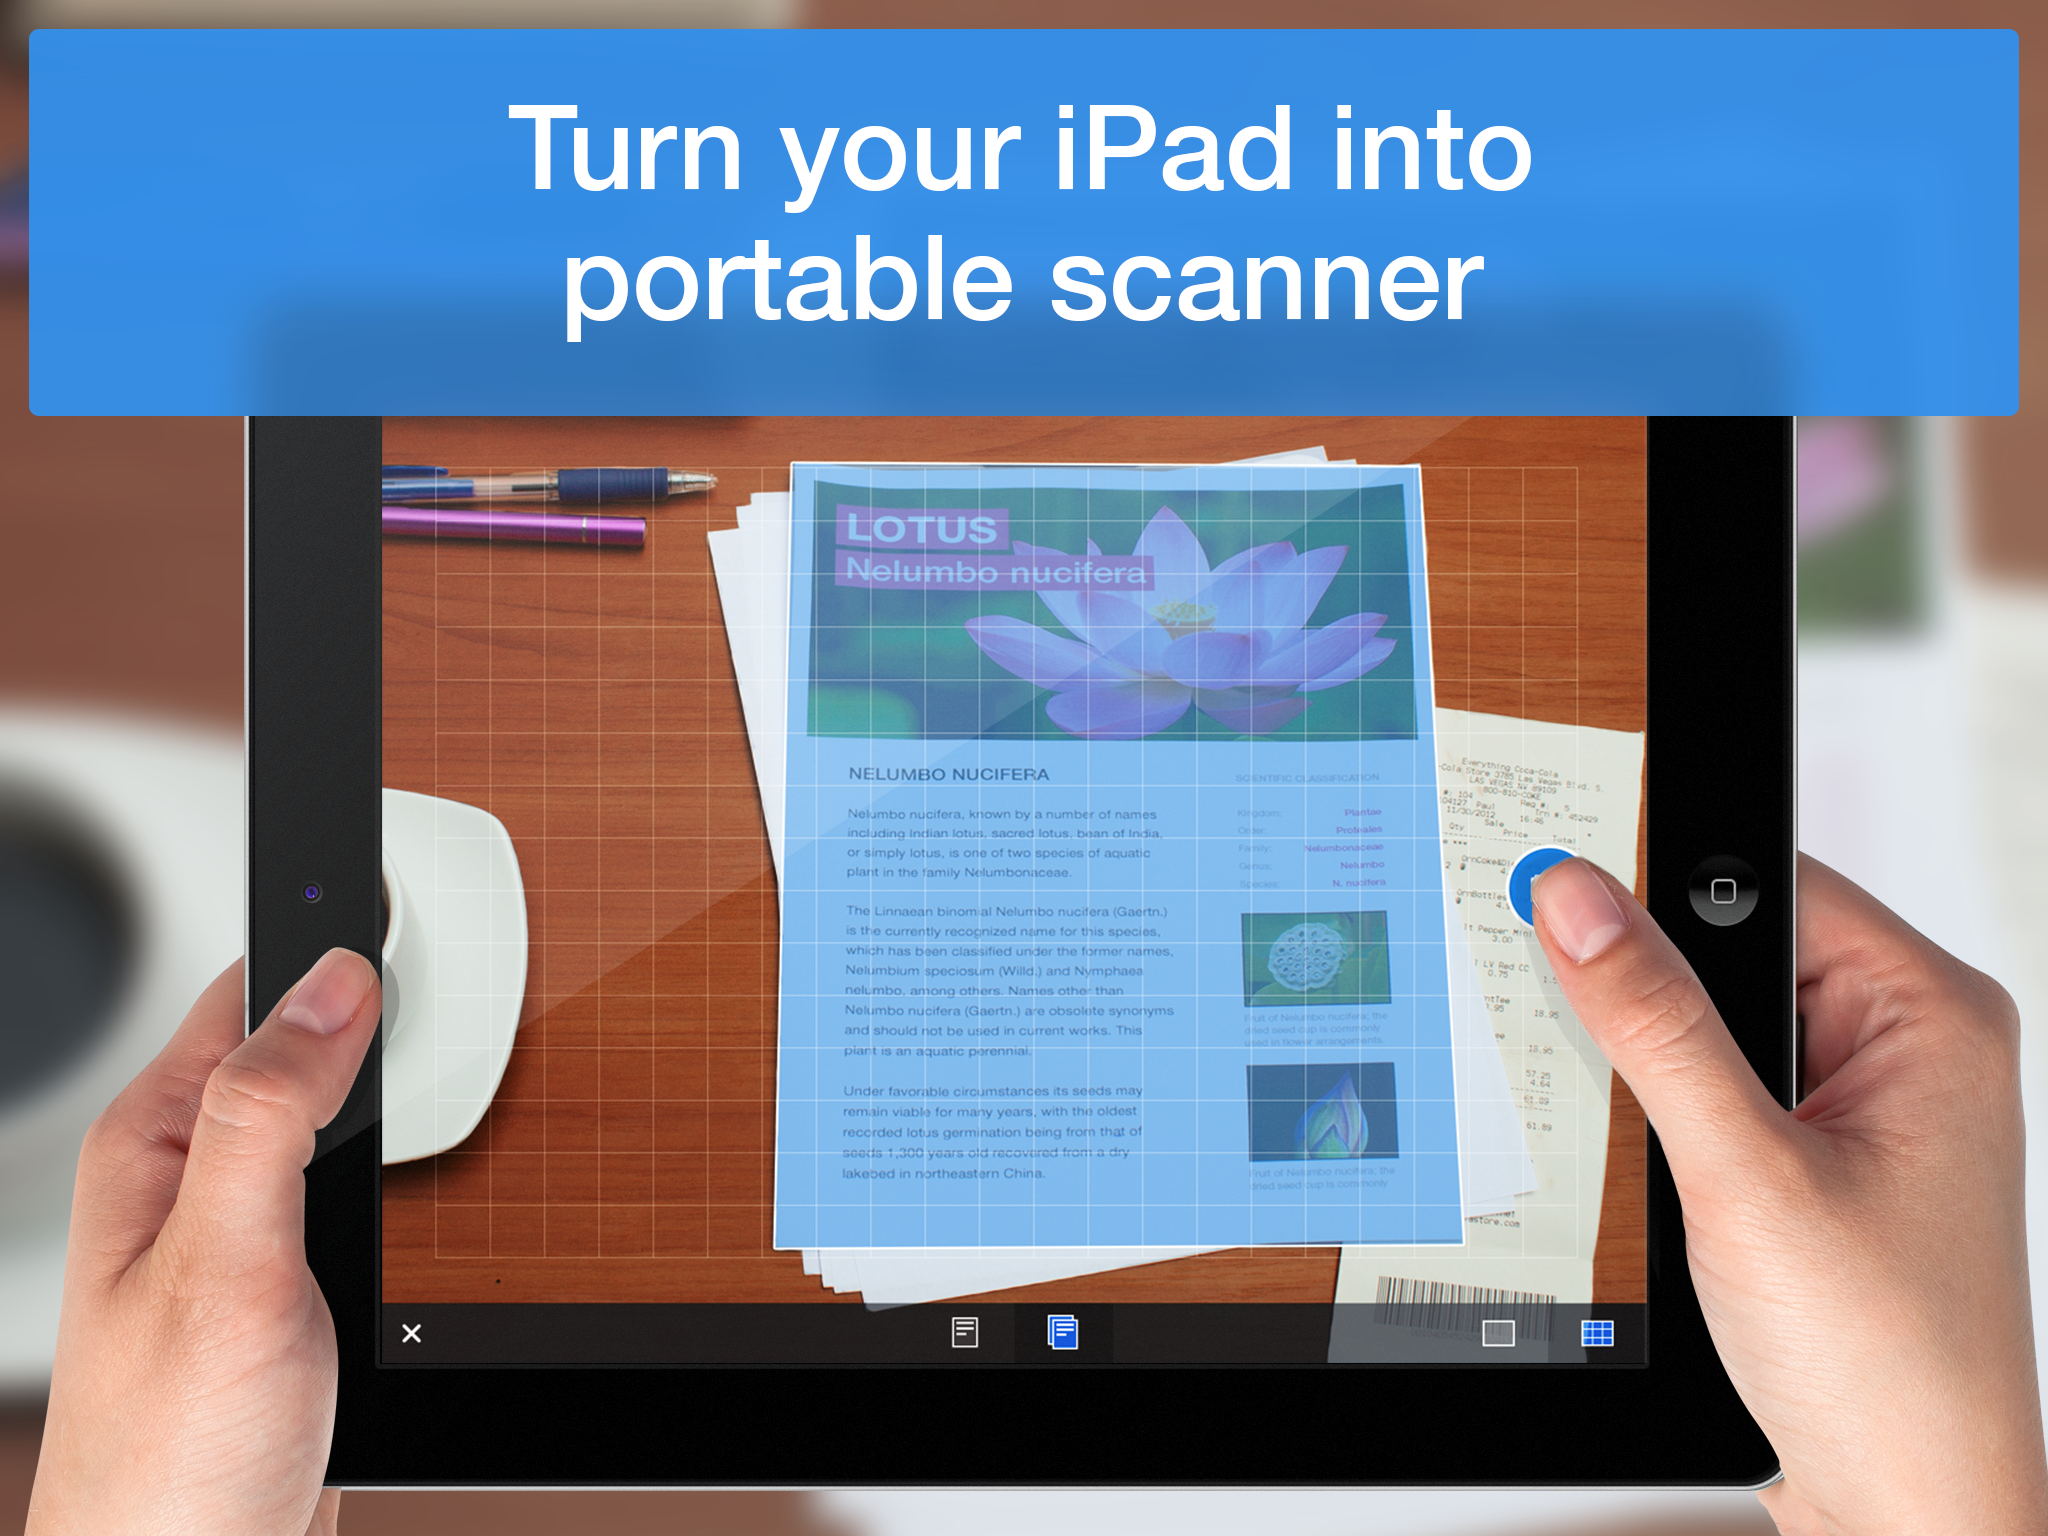 scanner pro app manual